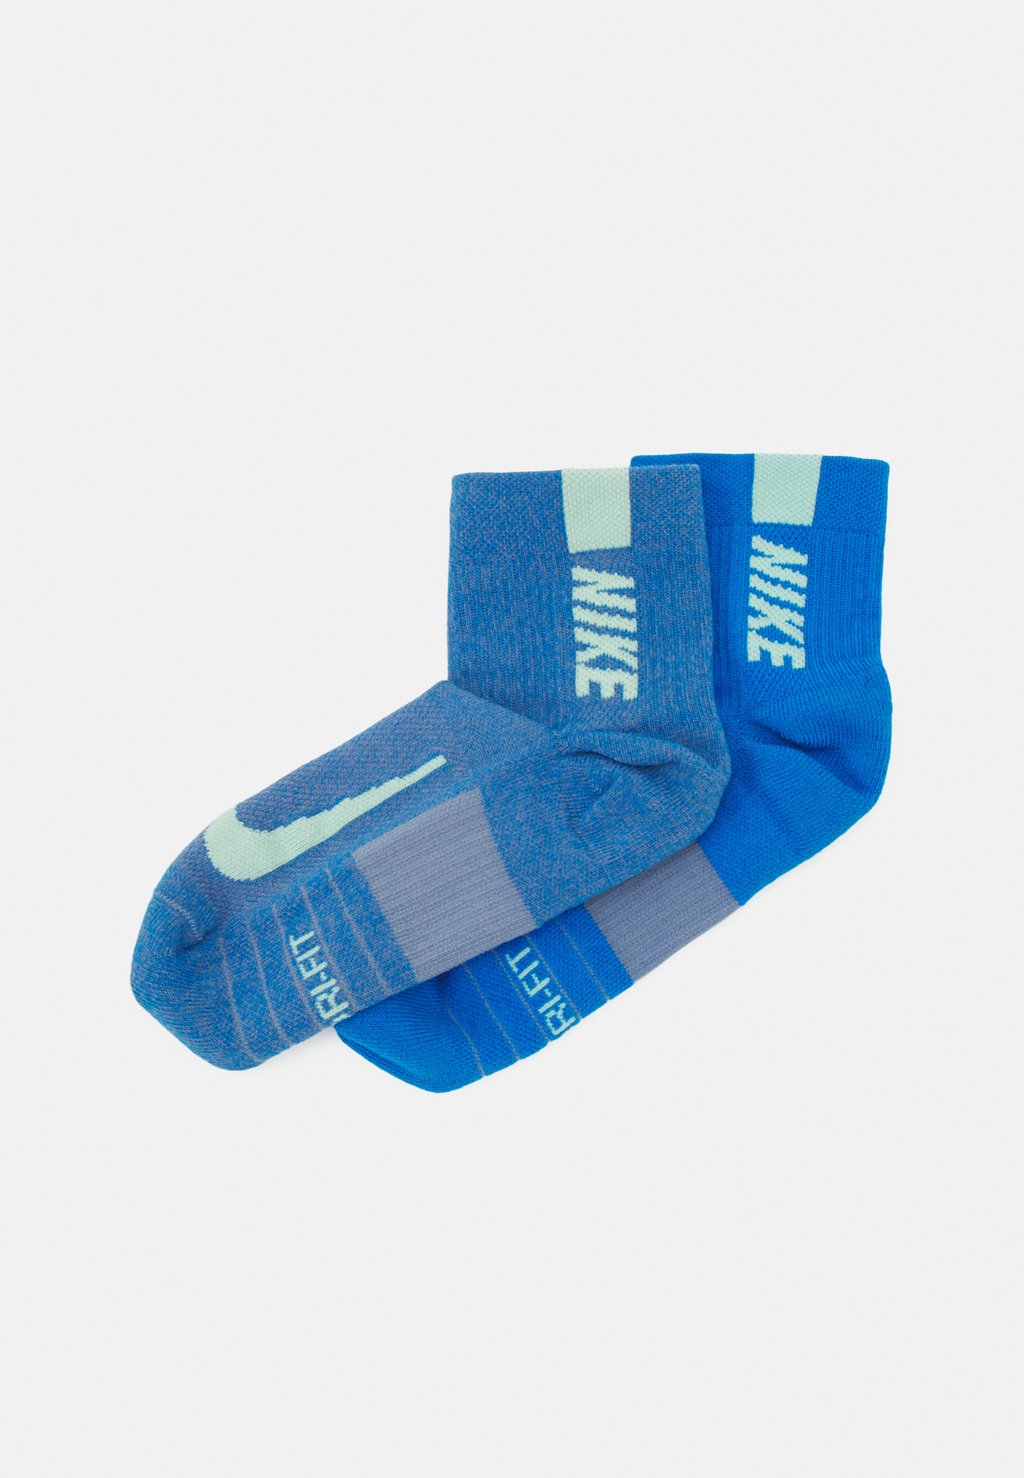 Спортивные носки Ankle Unisex 2 Pack Nike, цвет photo blue ashen slate(vapor green)/photo blue(vapor green) kpop enhypen 2021 season’s greetings one inch id photo photo postcard engene